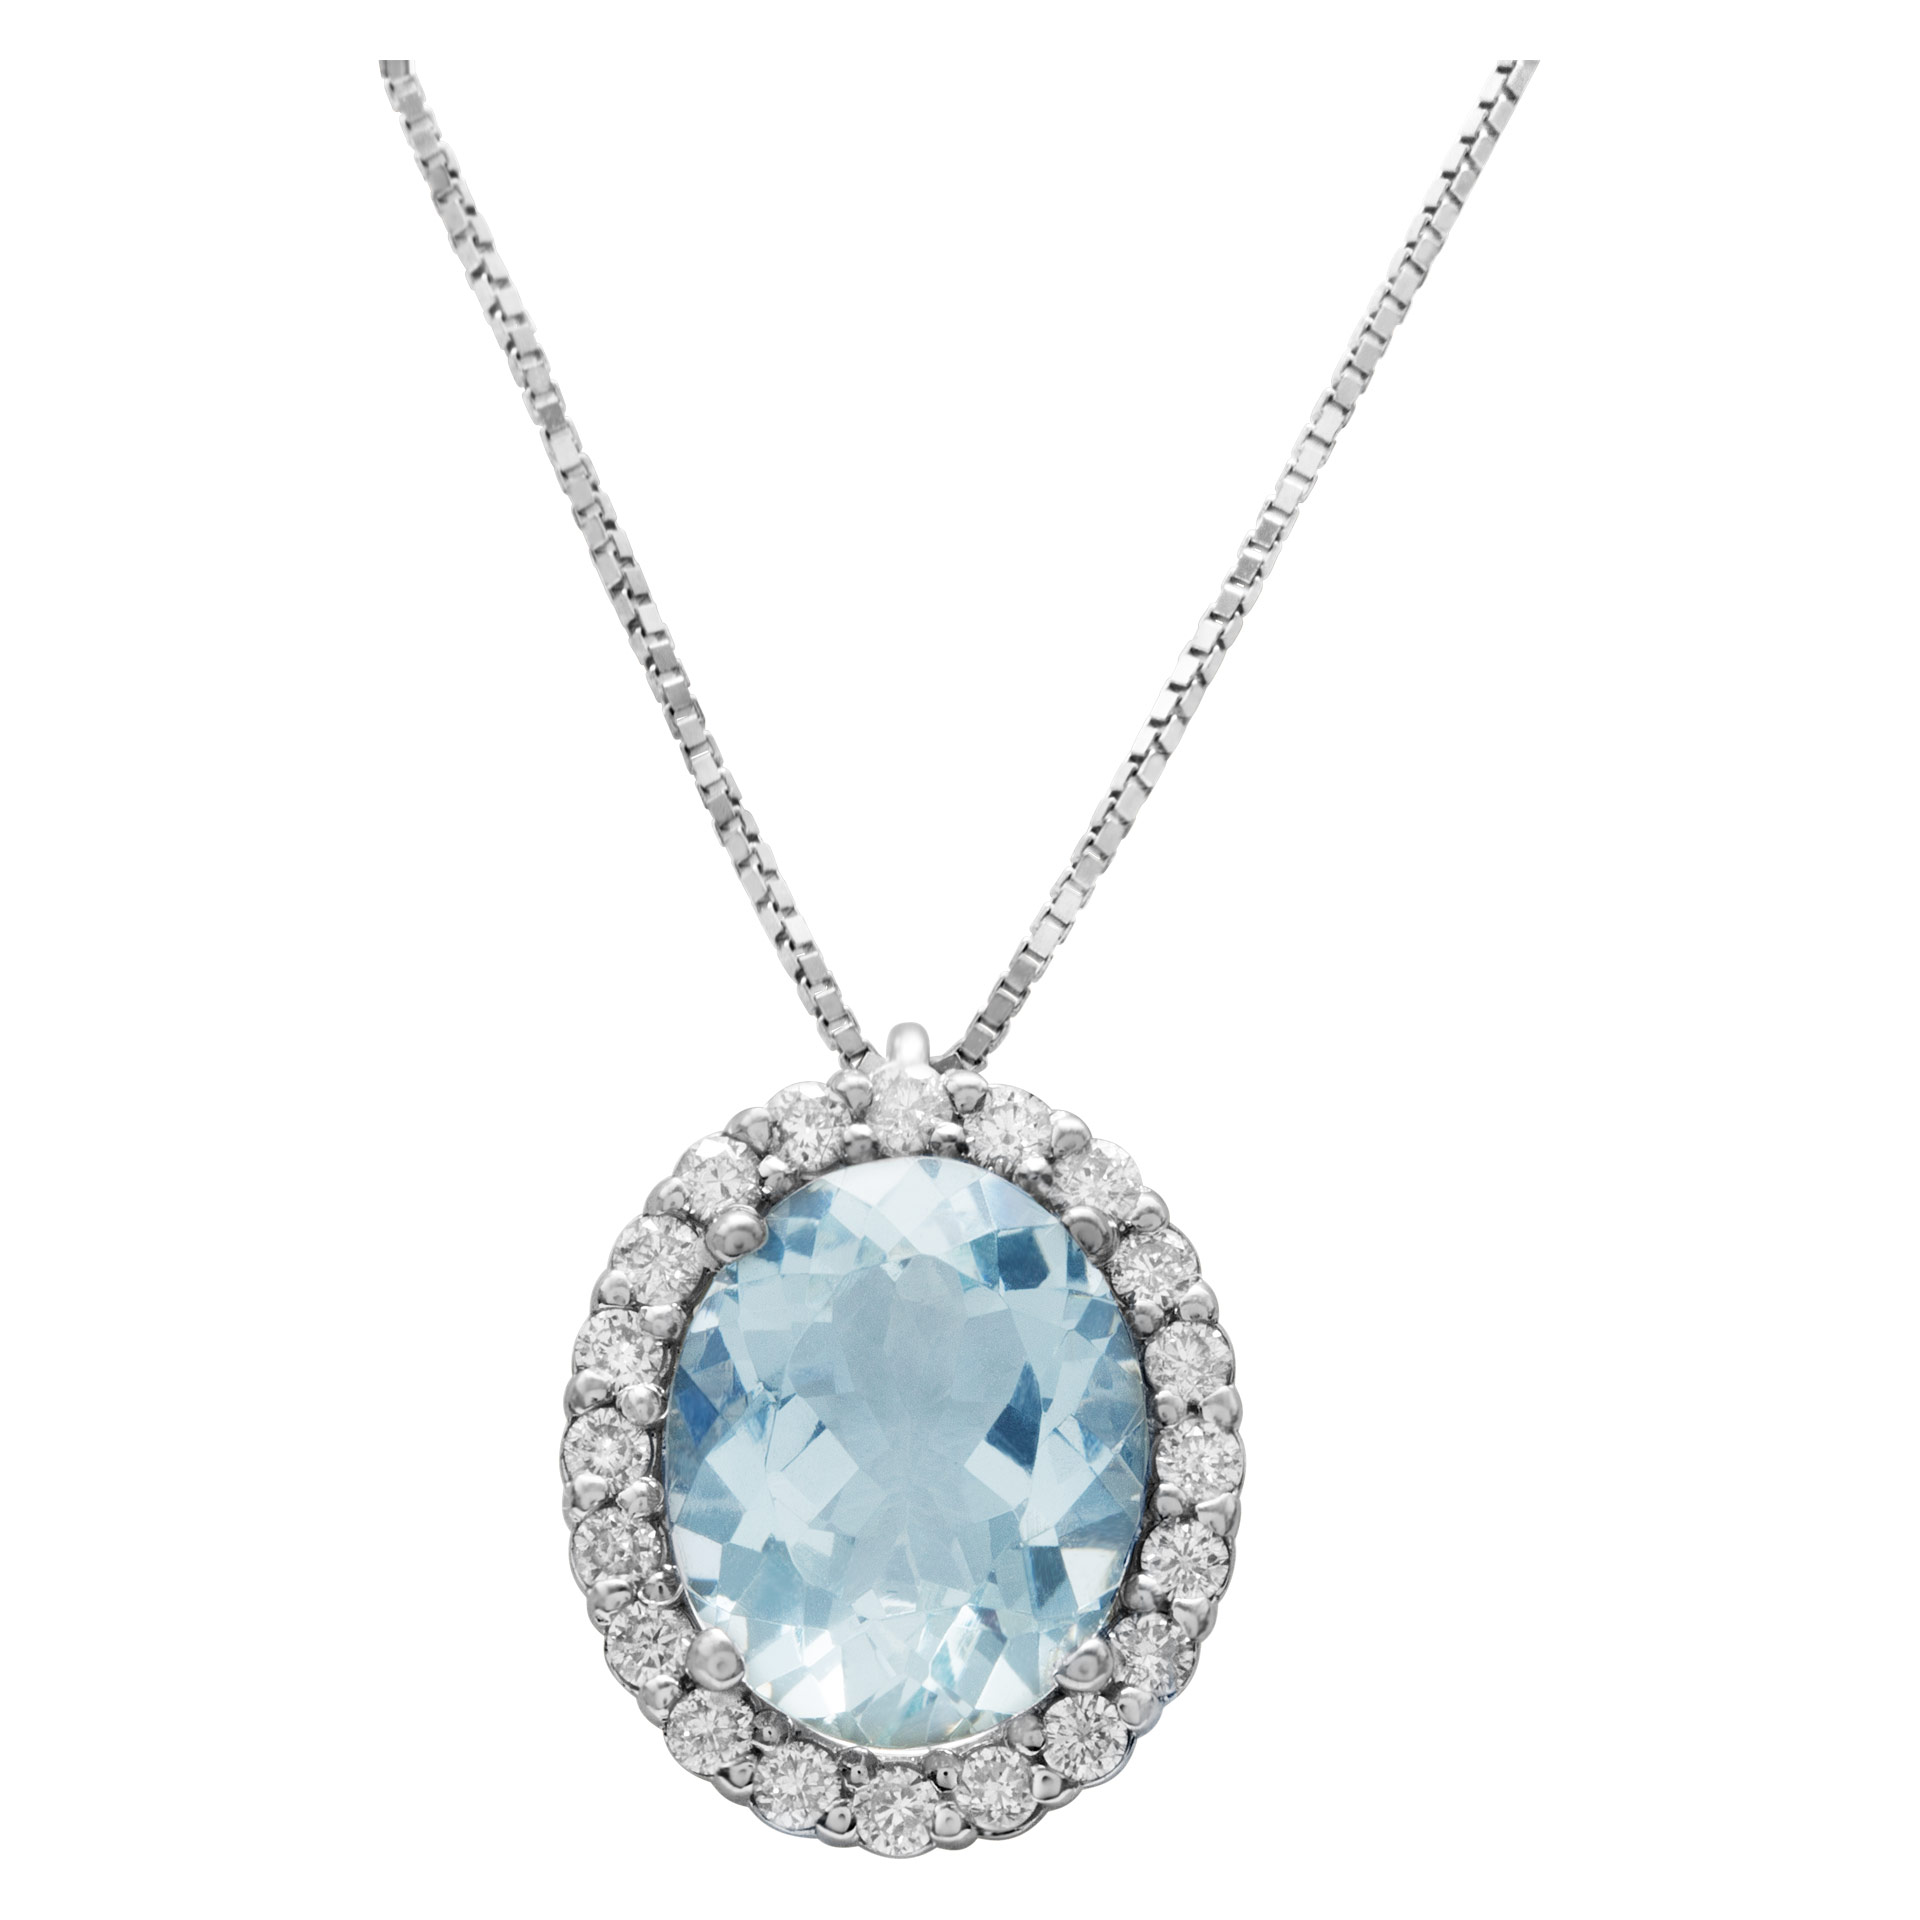 Sweet Aquamarine pendant with diamonds